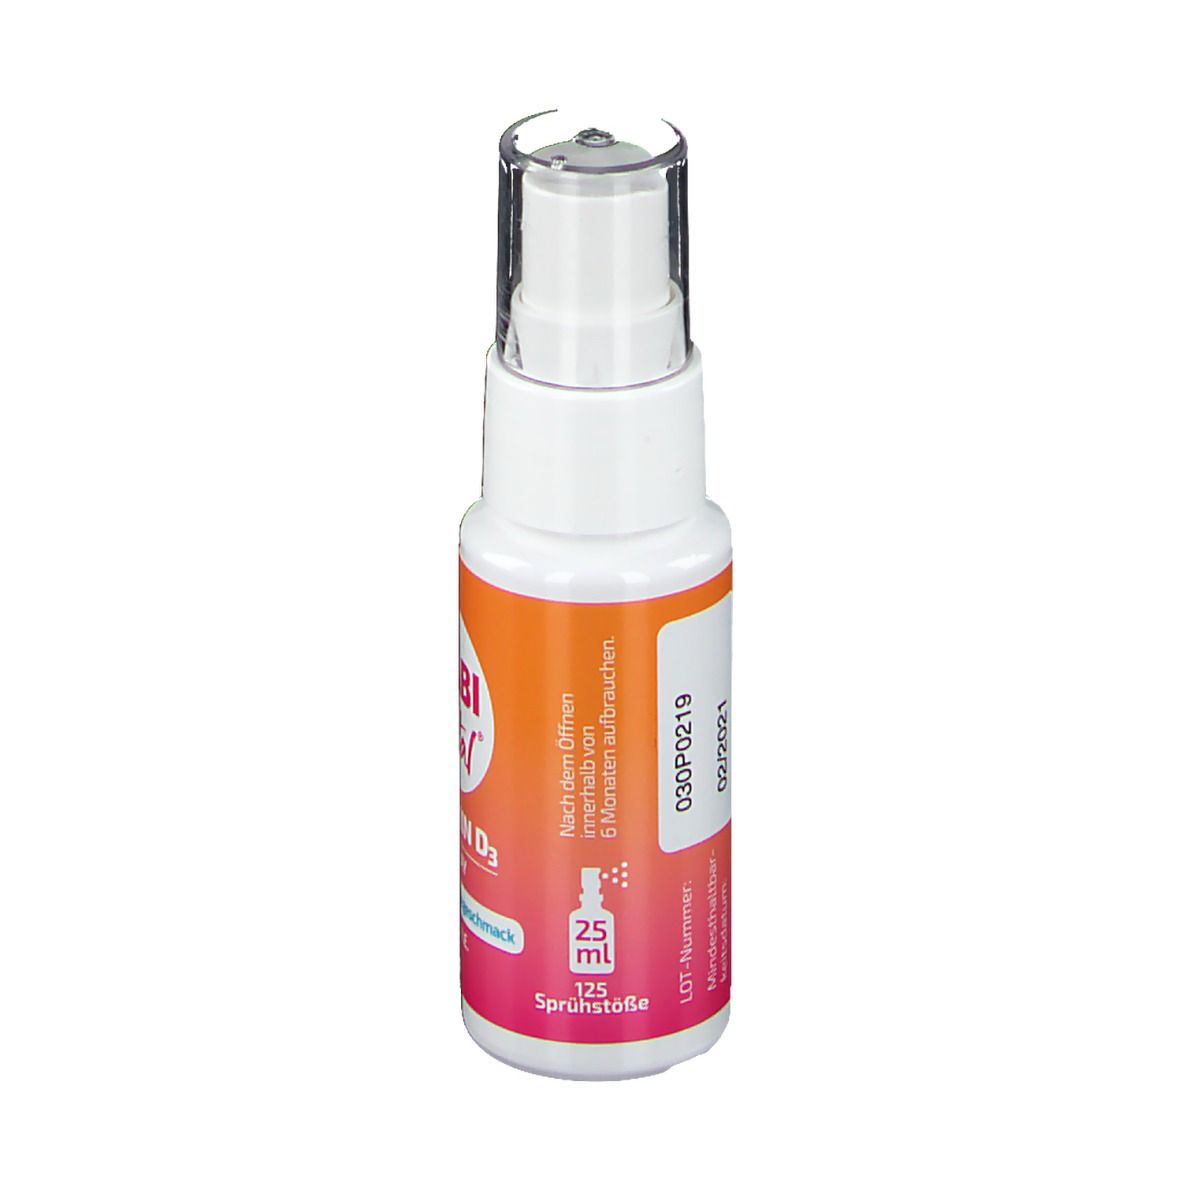 KabiVital Vitamin D3 Spray 2000 I.E. Pfefferminz